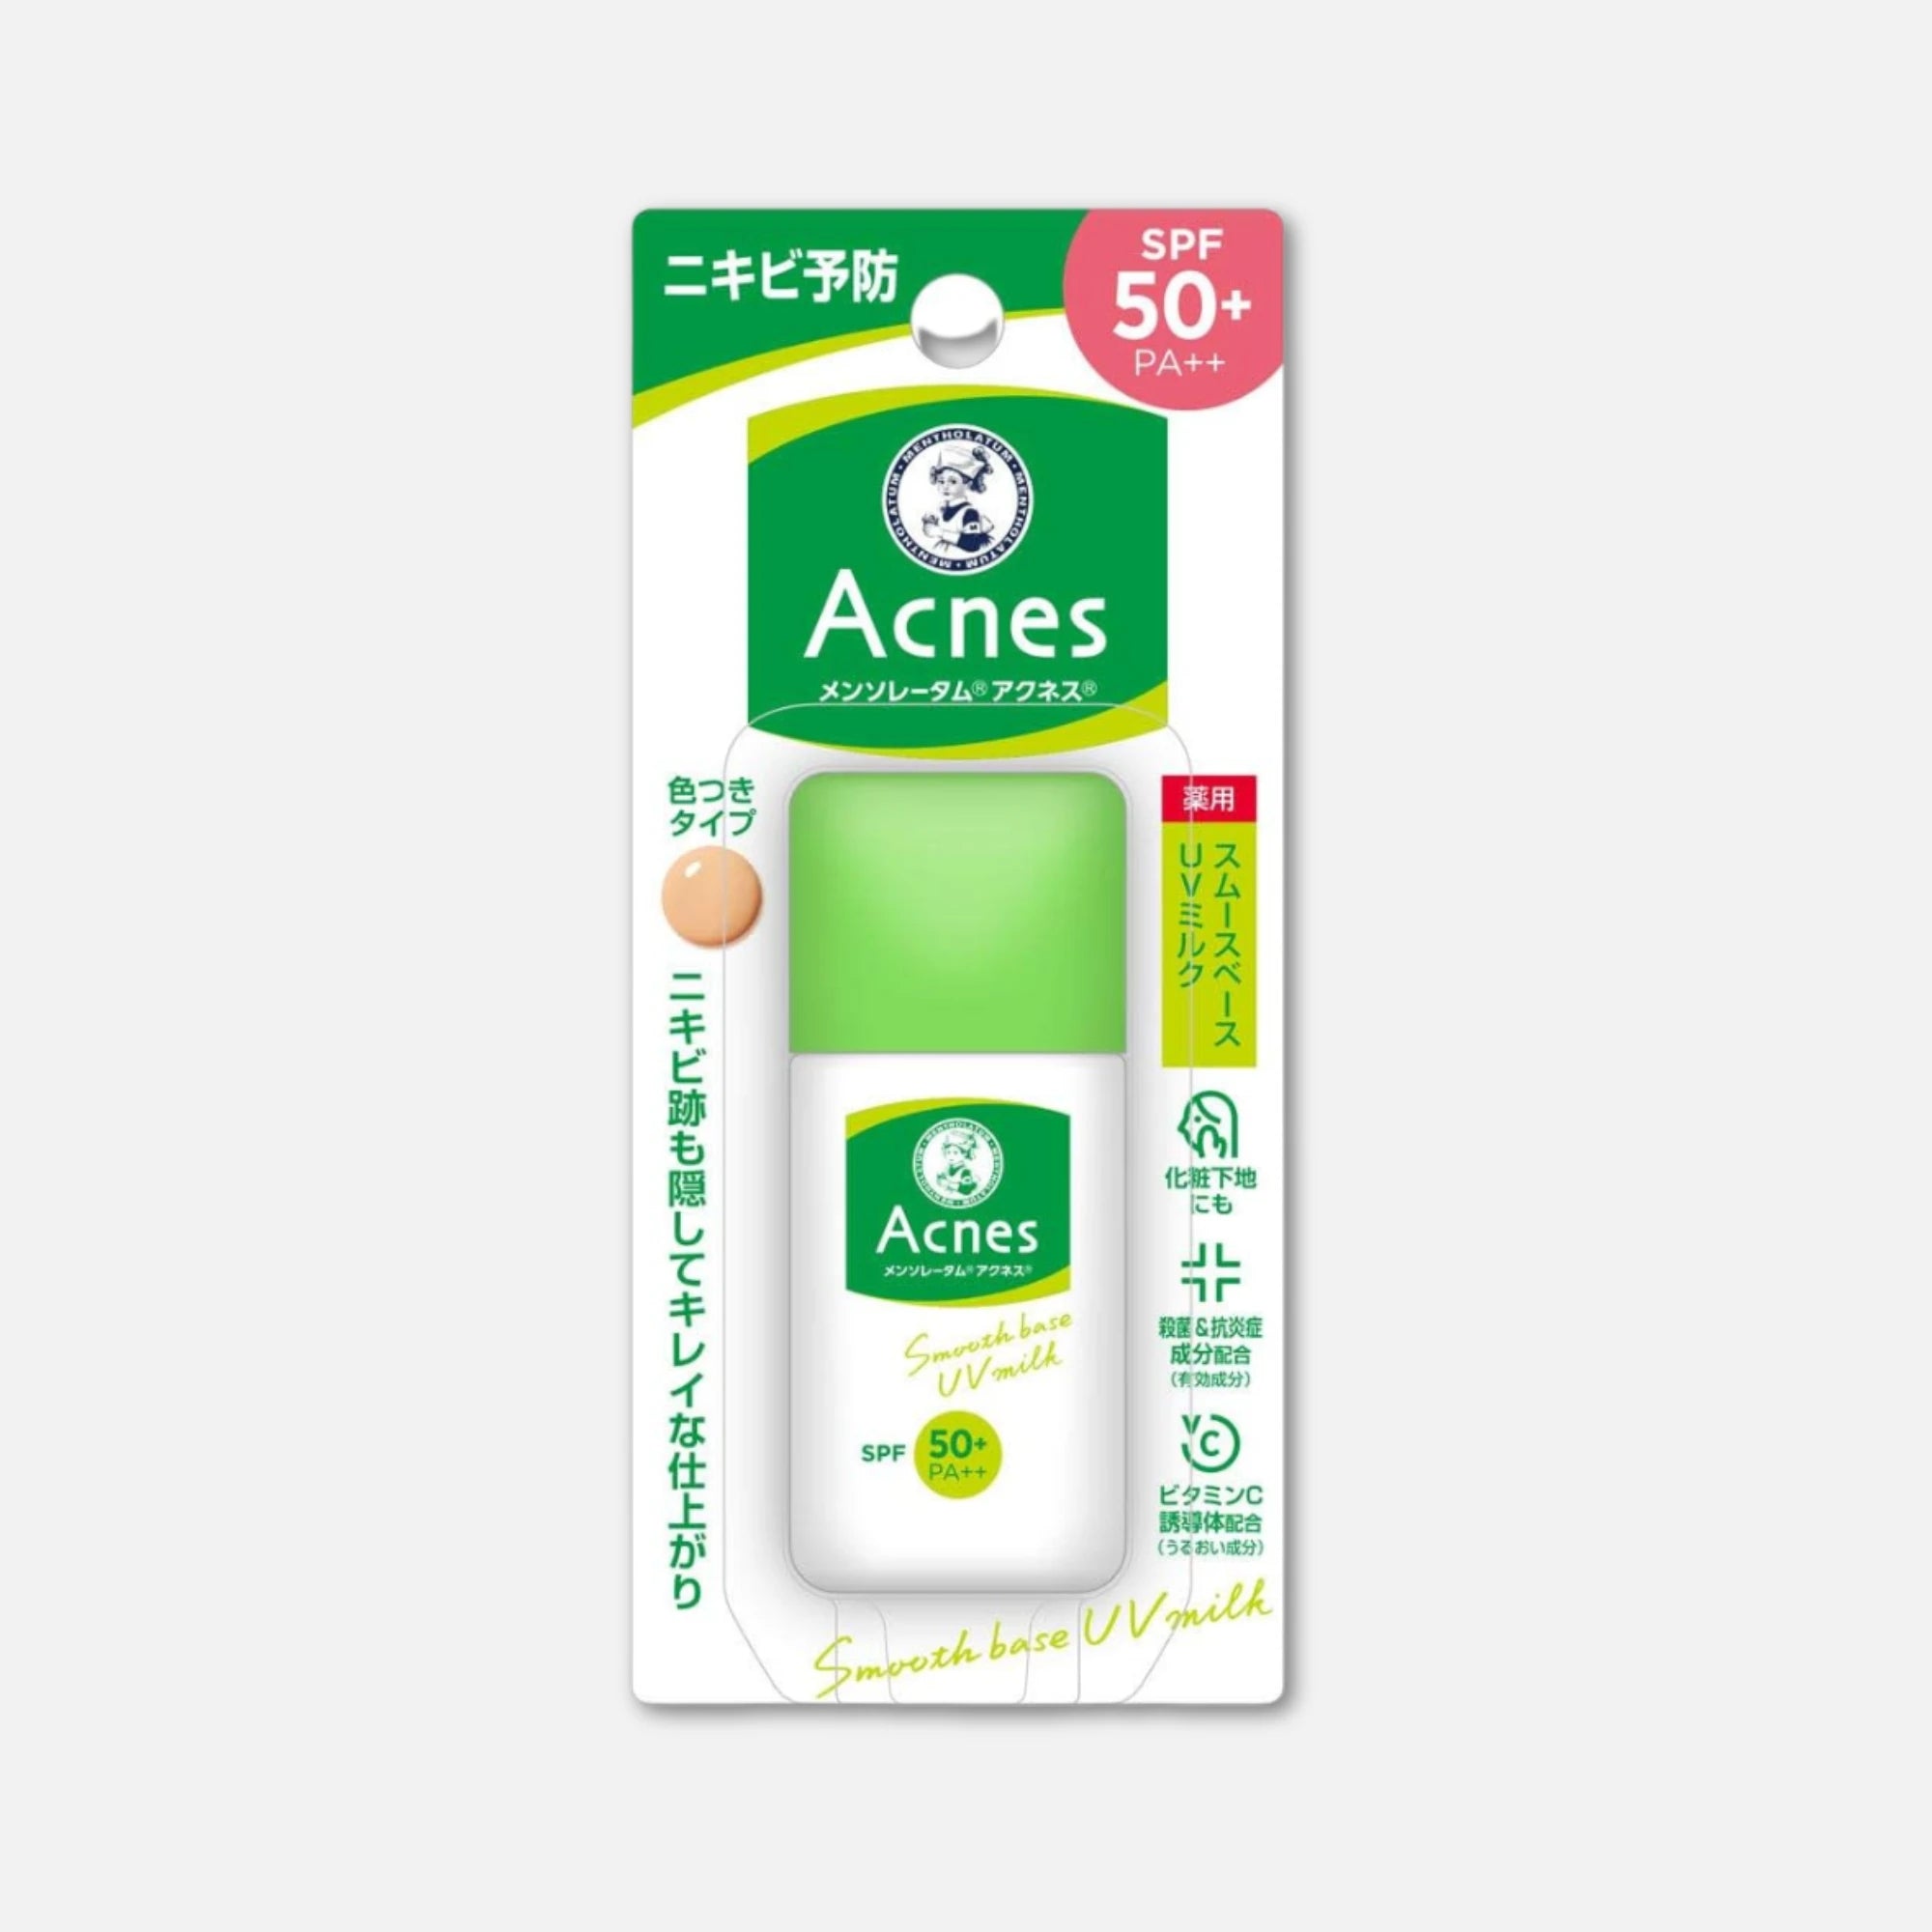 Acnes Medicated Smooth Base UV Milk SPF50+/PA++ 30g